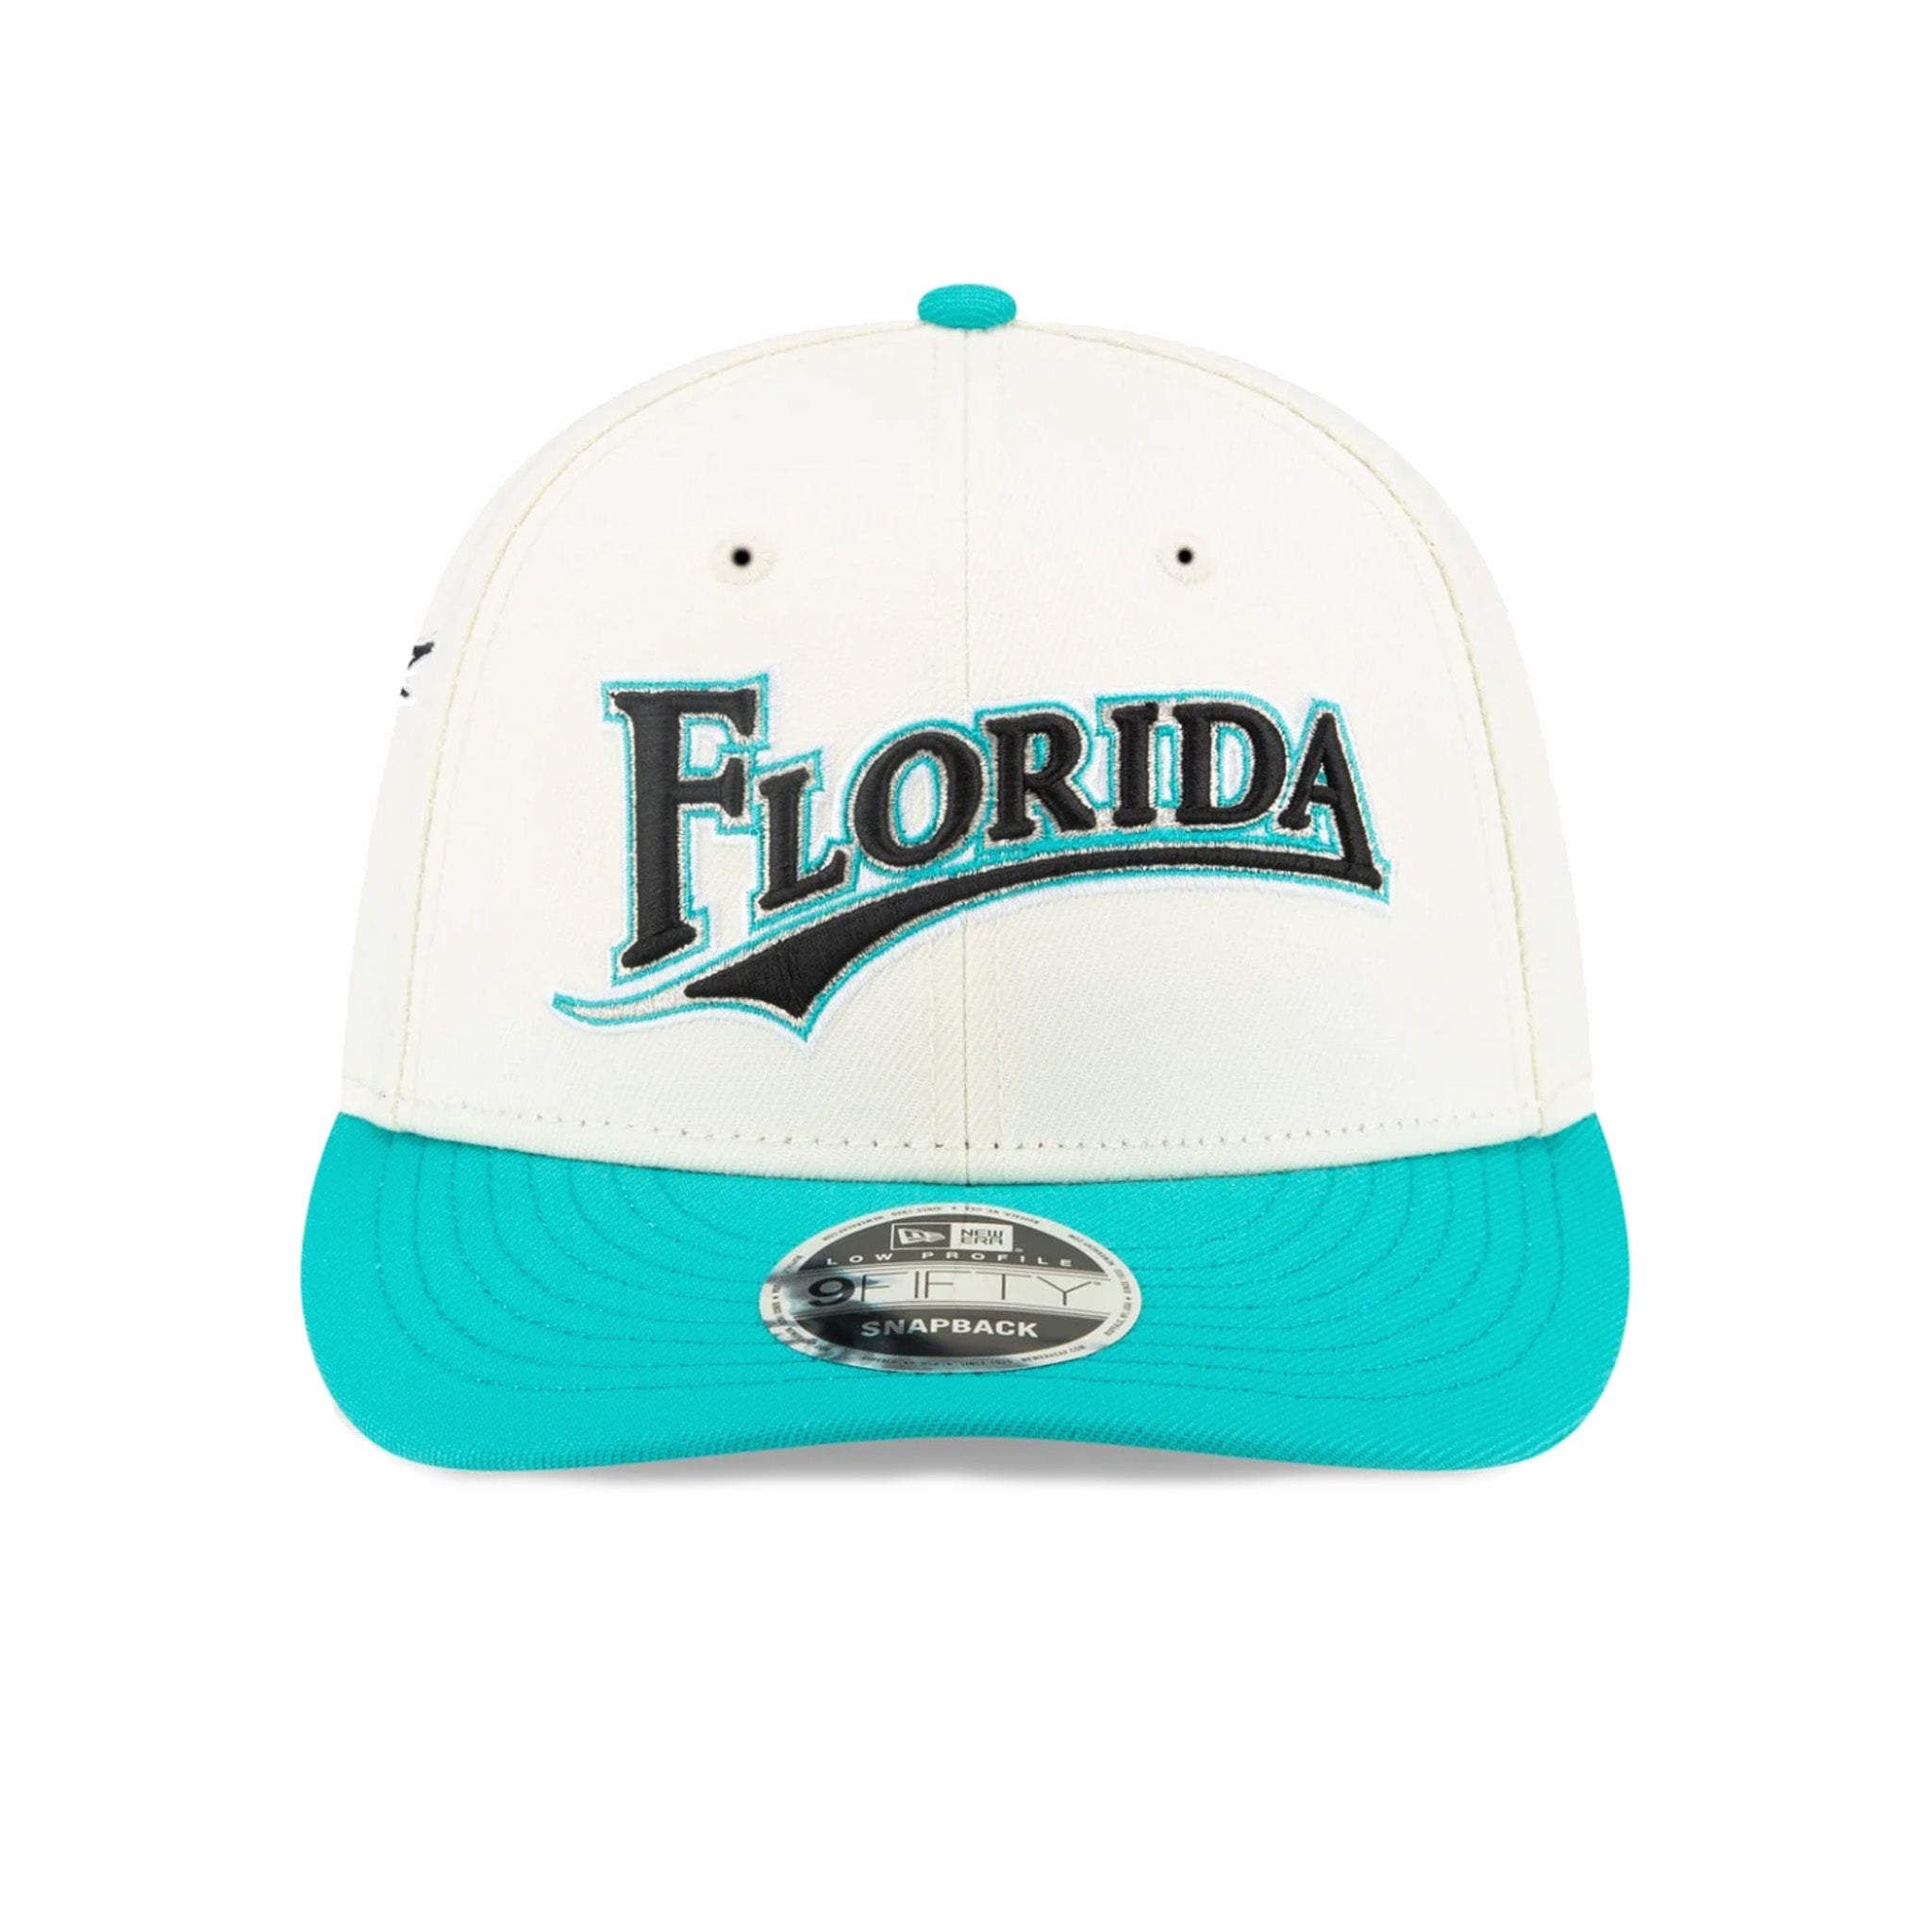 New Era x FELT Florida Marlins Low Profile 9FIFTY Snapback (White) - August Shop